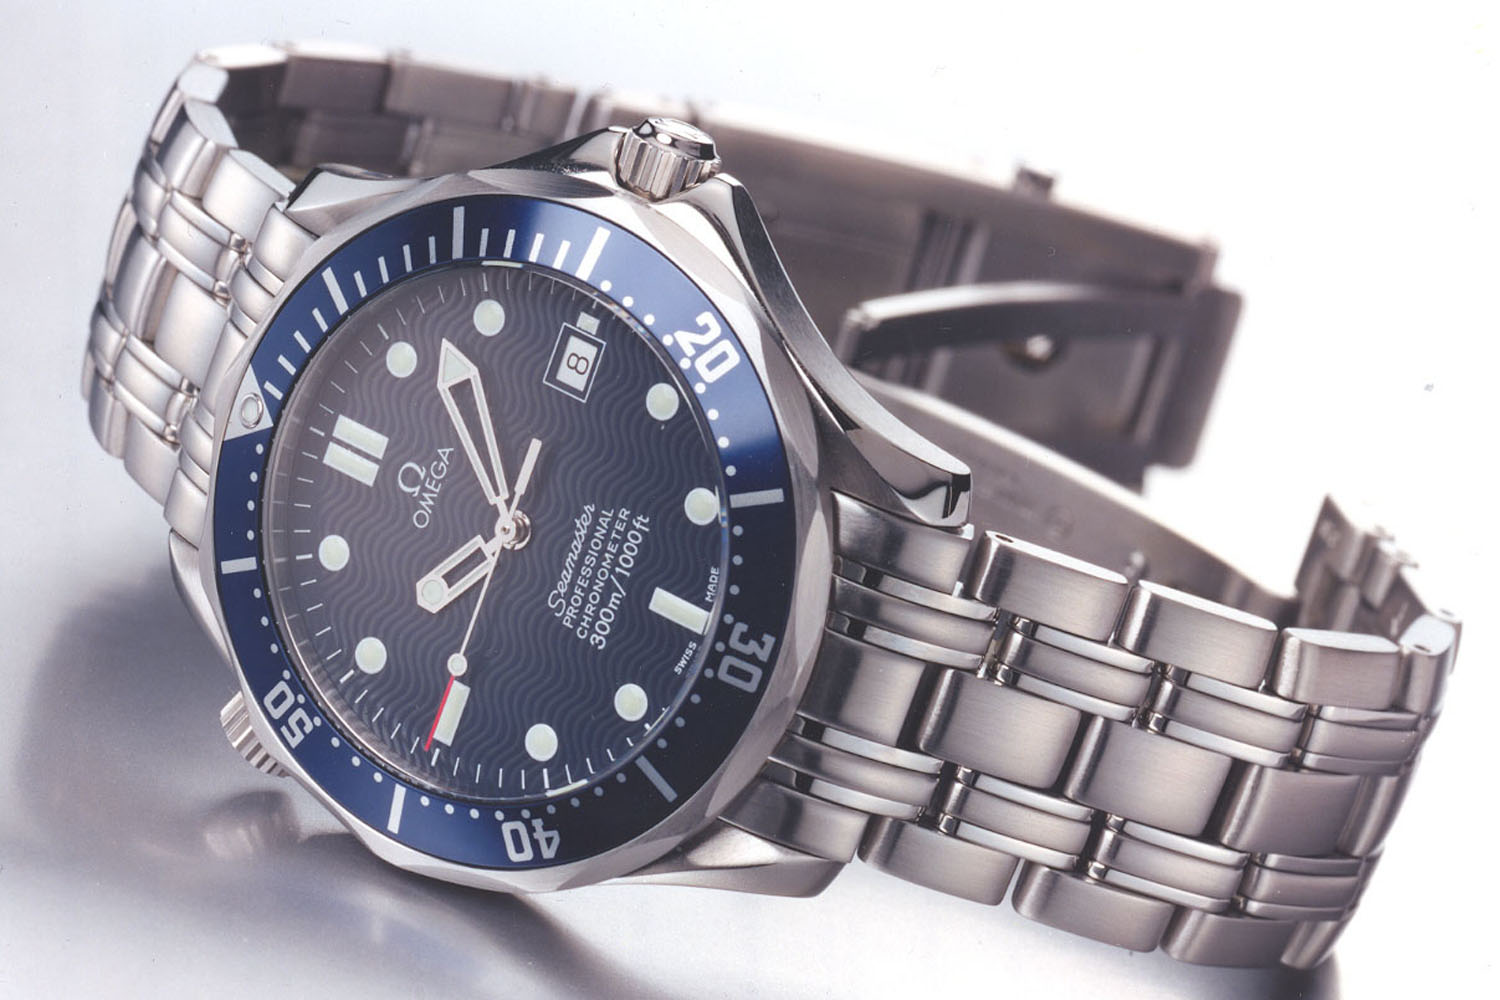 Omega Seamaster 300m professional chronometer 007 - 2531.80.00